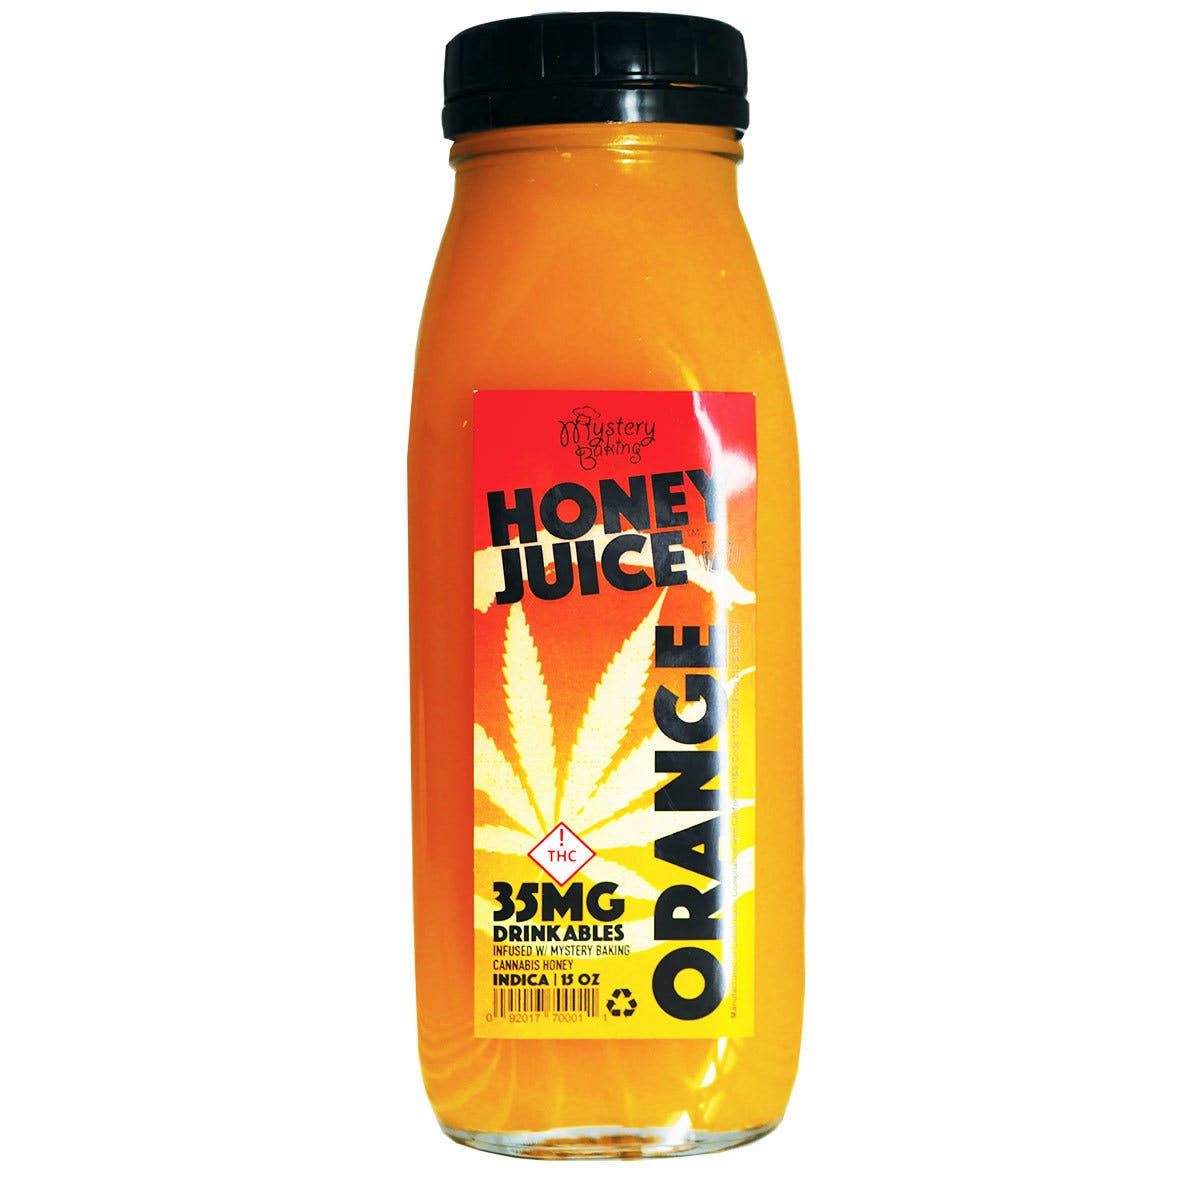 Orange Honey Juice 35mg